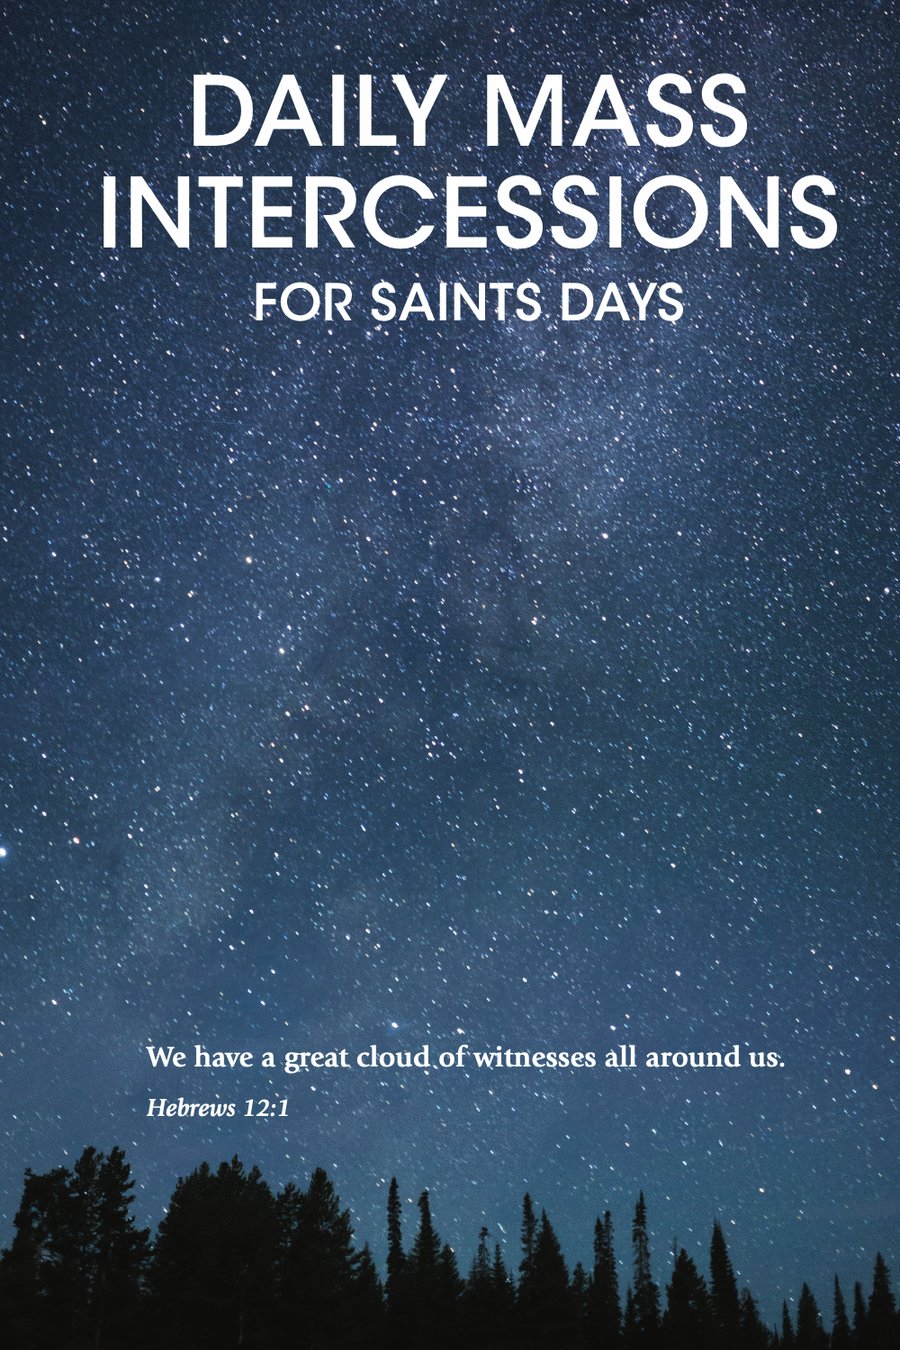 Daily Mass Intercessions - Saints Edition